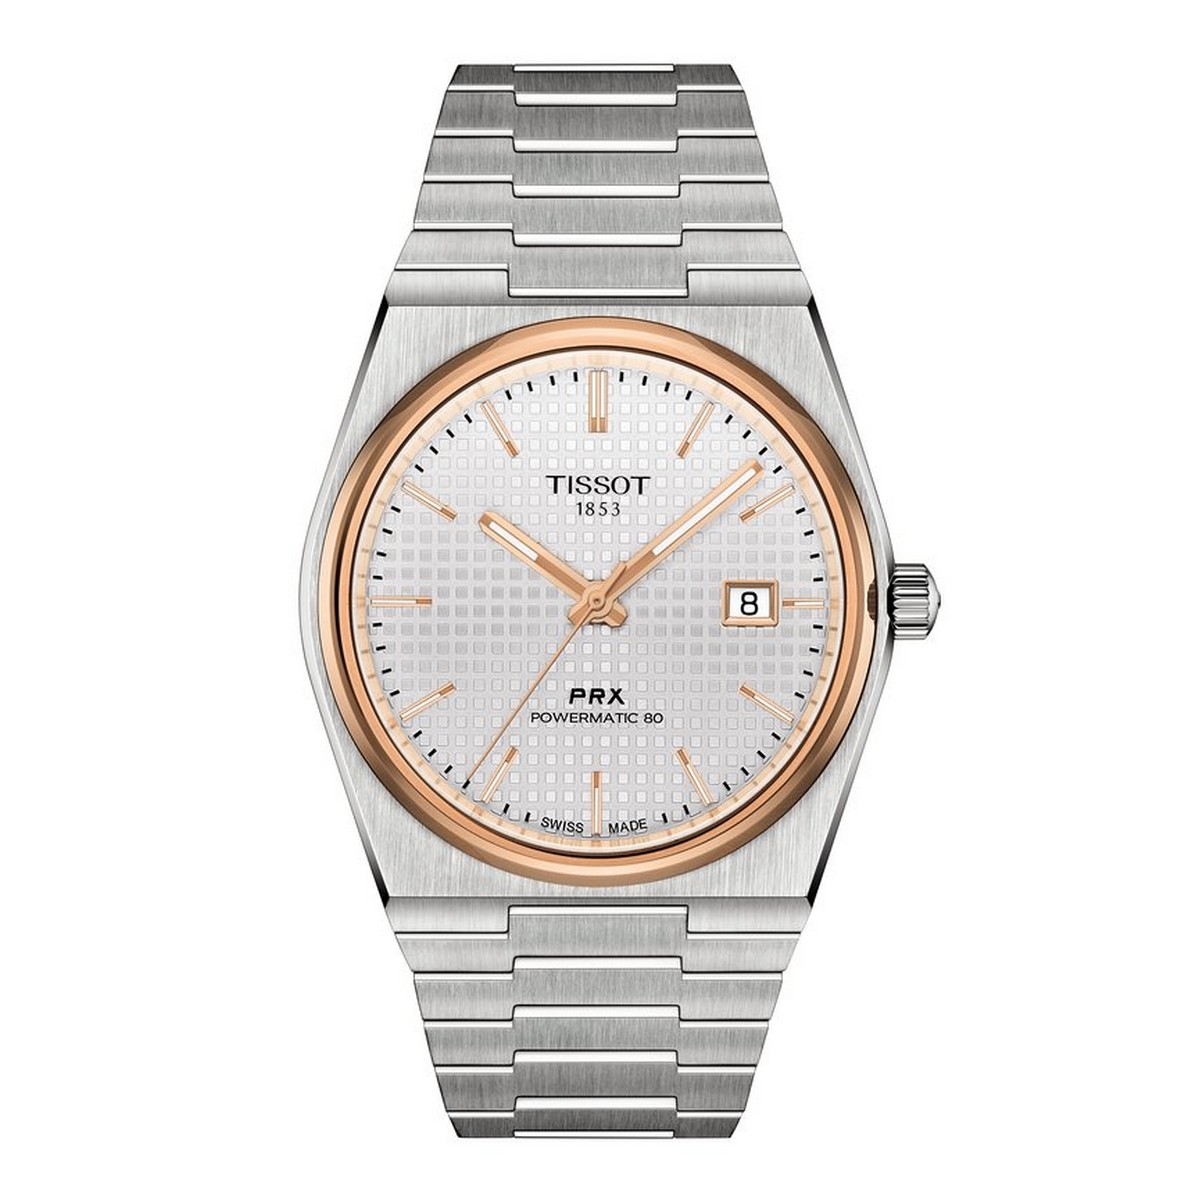 New Tissot Prx Powermatic 80 Men's Watch - T137.407.21.031.00